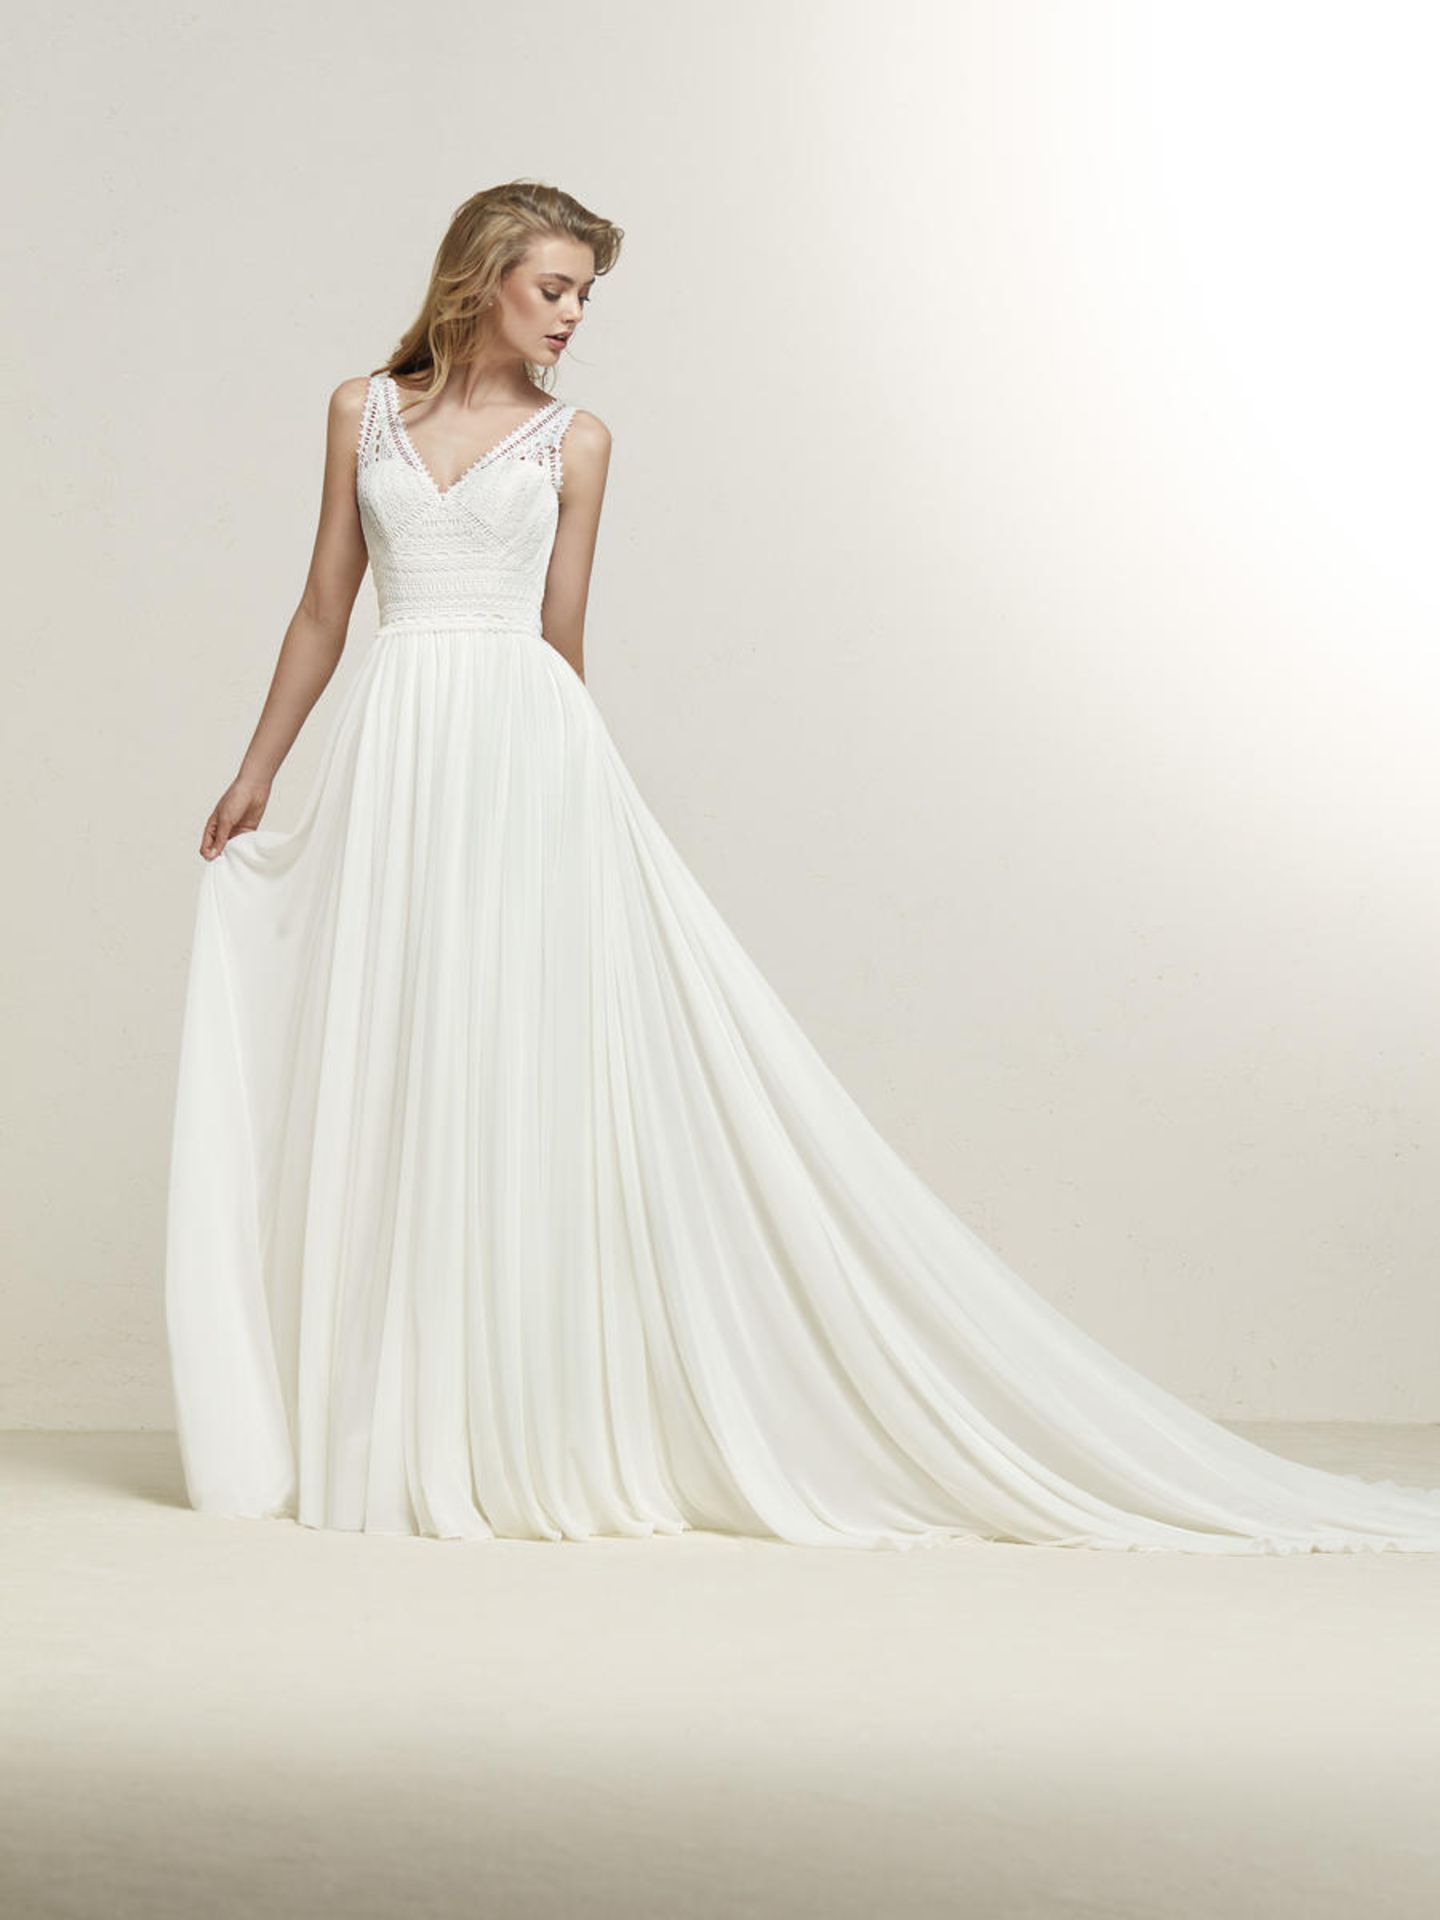 1 x PRONOVIAS 'Dramia' Designer Crocheted Lace Wedding Dress Bridal Gown, With Chiffon Gathered